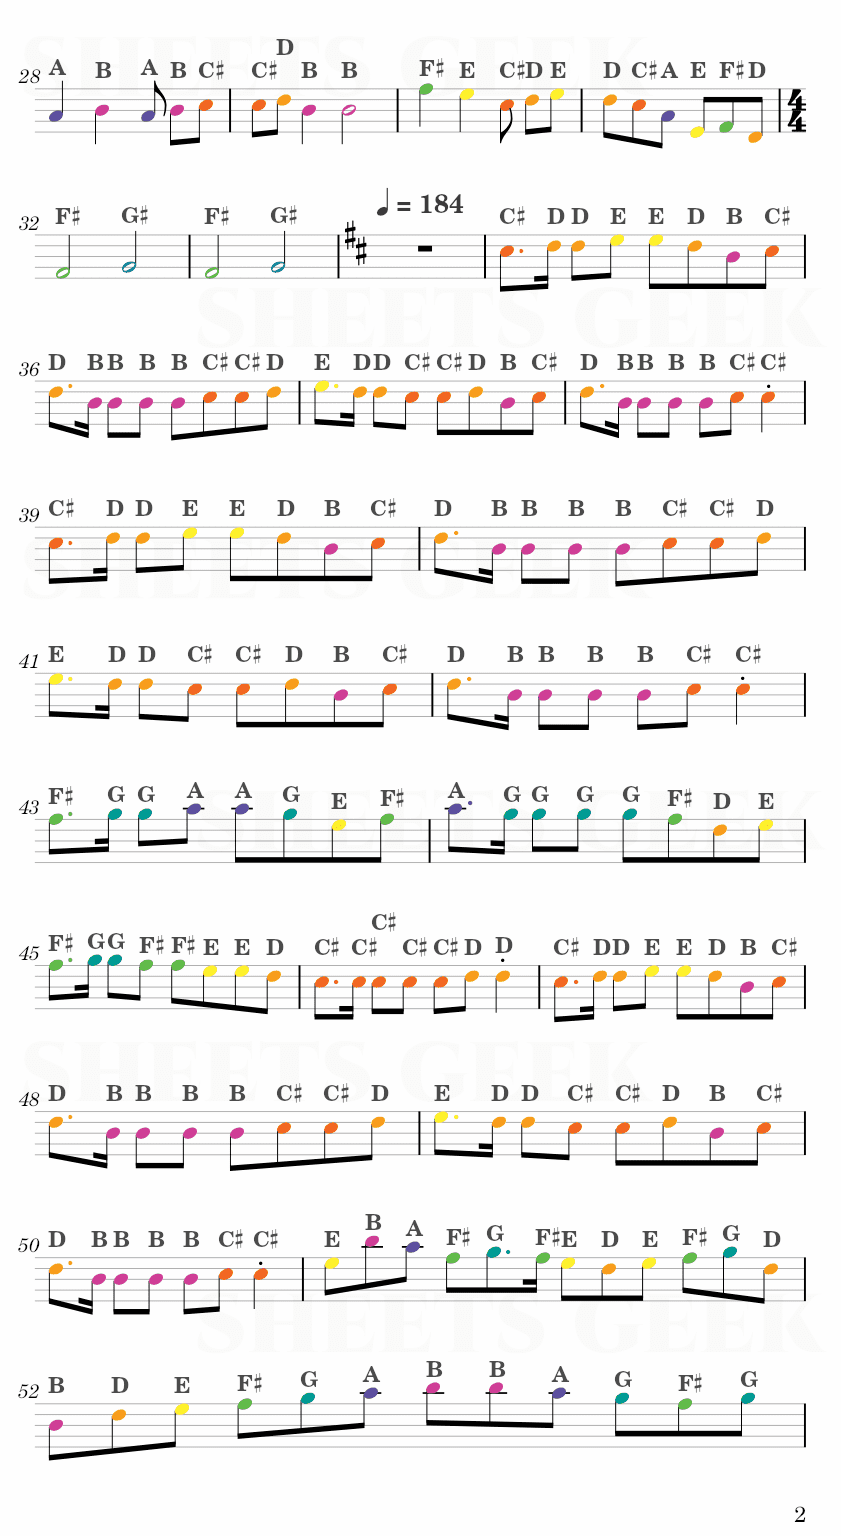 Riverdance Theme - Bill Whelan Easy Sheet Music Free for piano, keyboard, flute, violin, sax, cello page 2